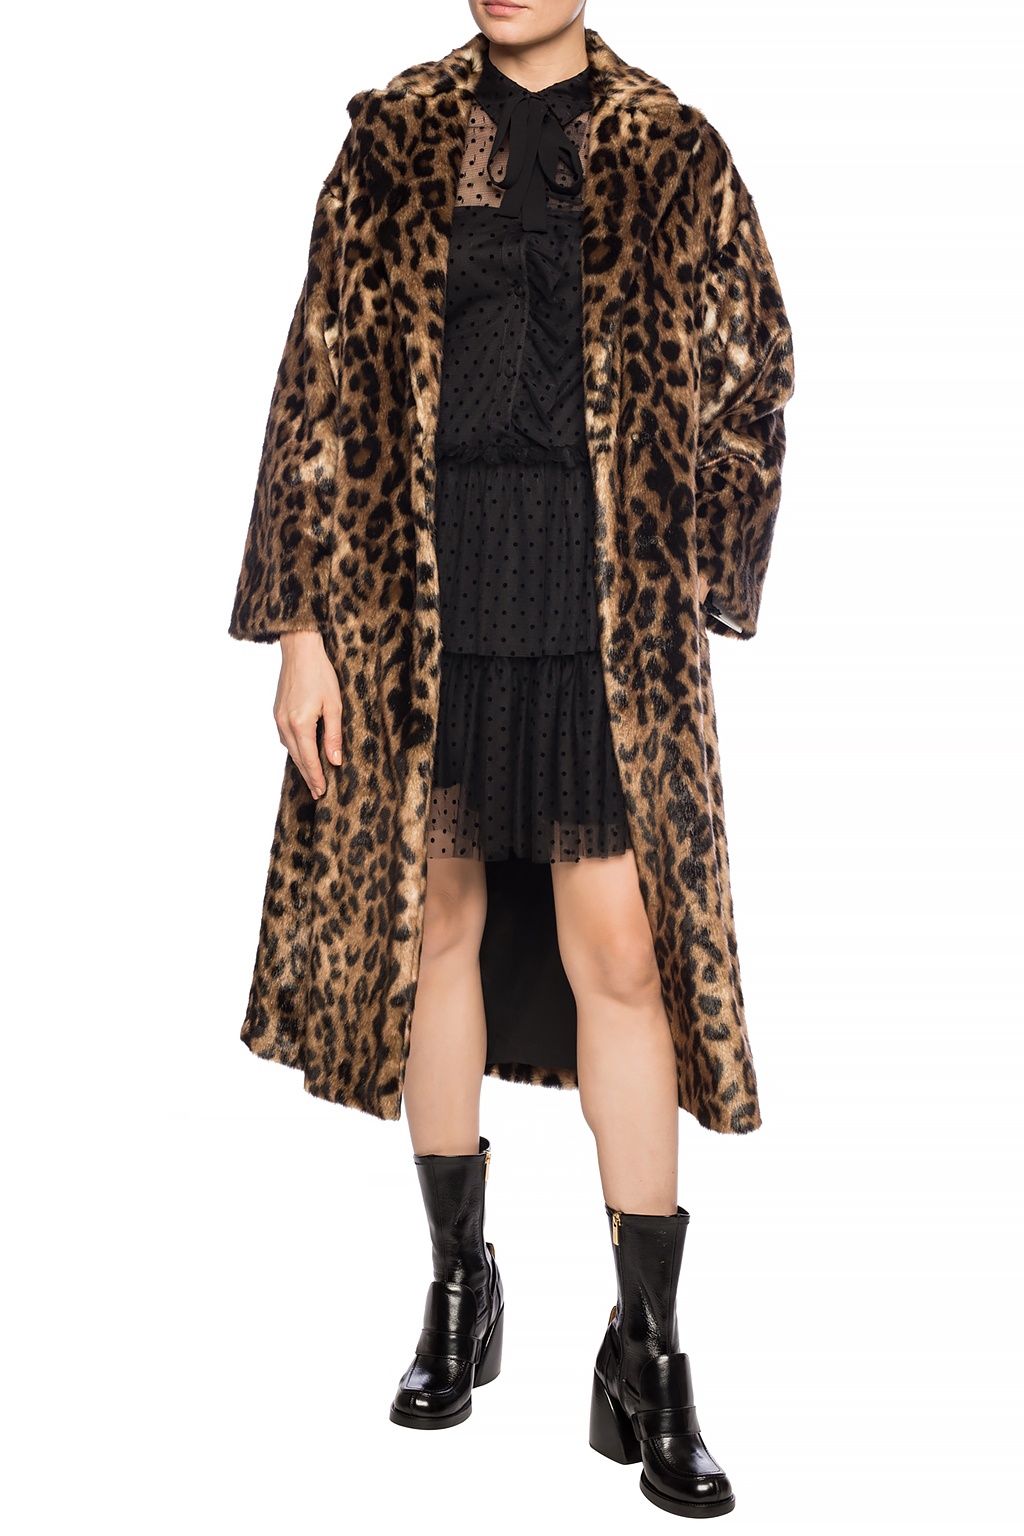 Red Valentino Leopard print coat | Women's Clothing | Vitkac